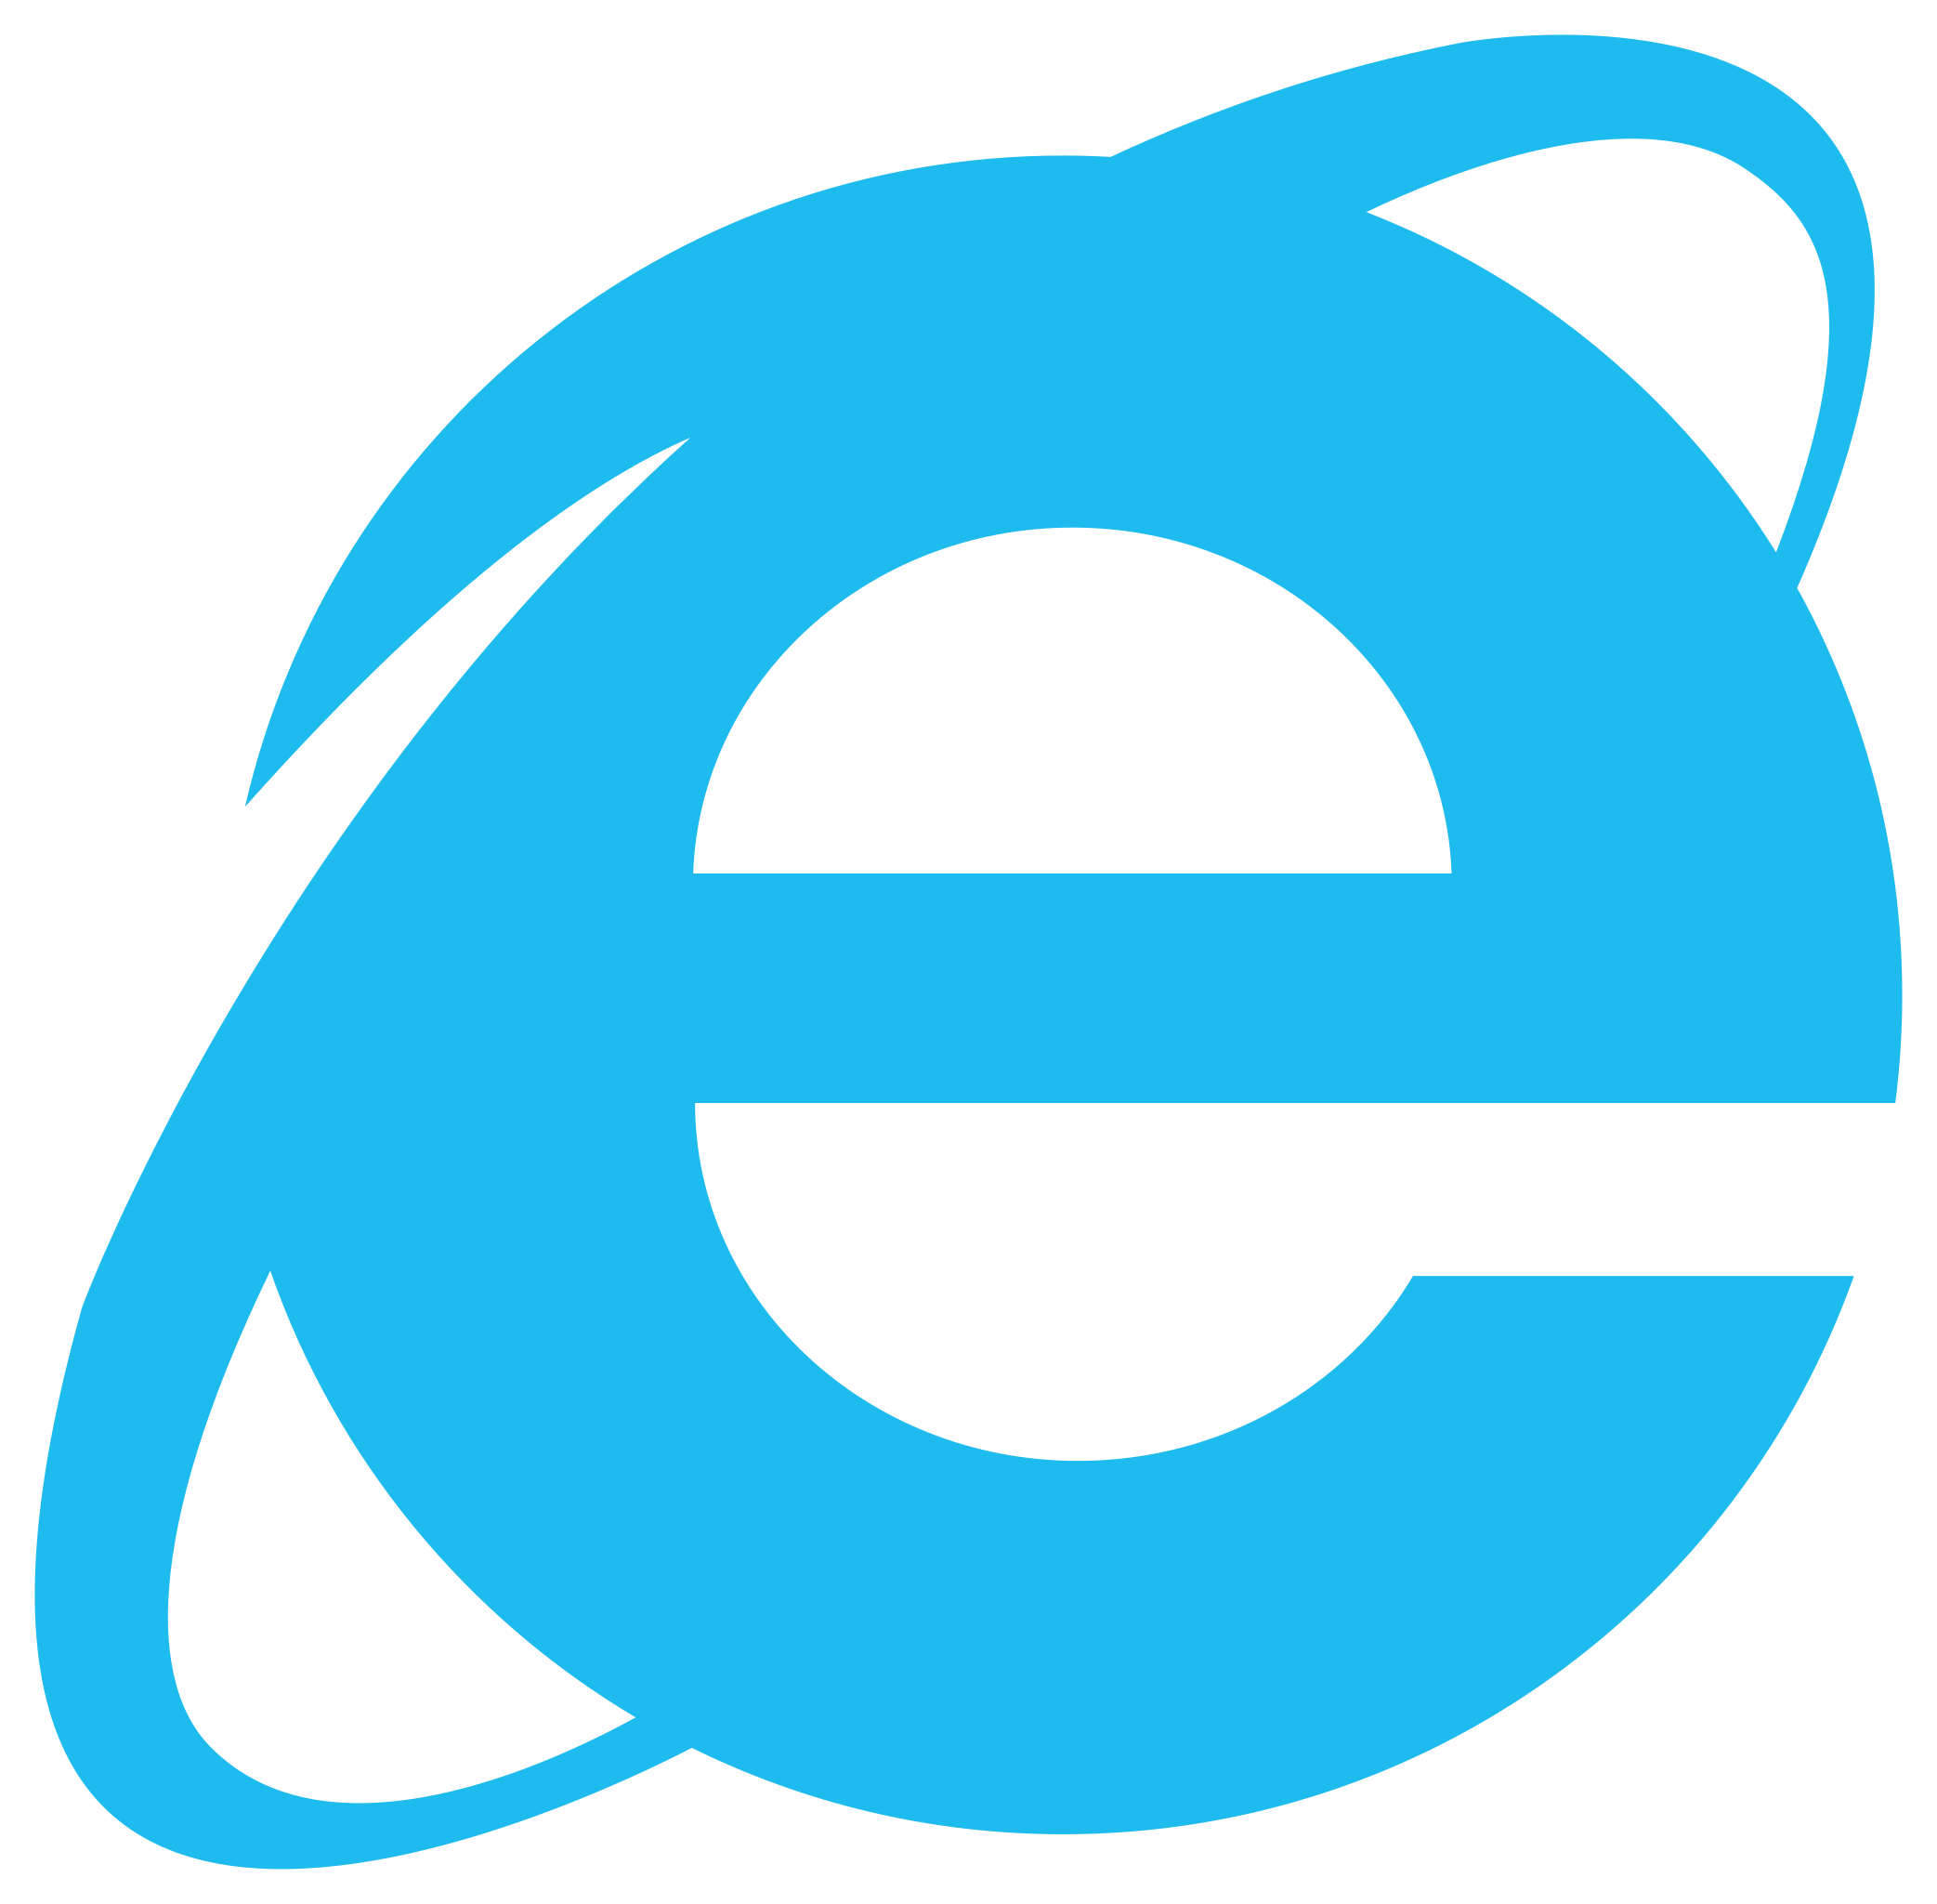 File:Internet Explorer 10+11 logo.svg - Wikimedia Commons